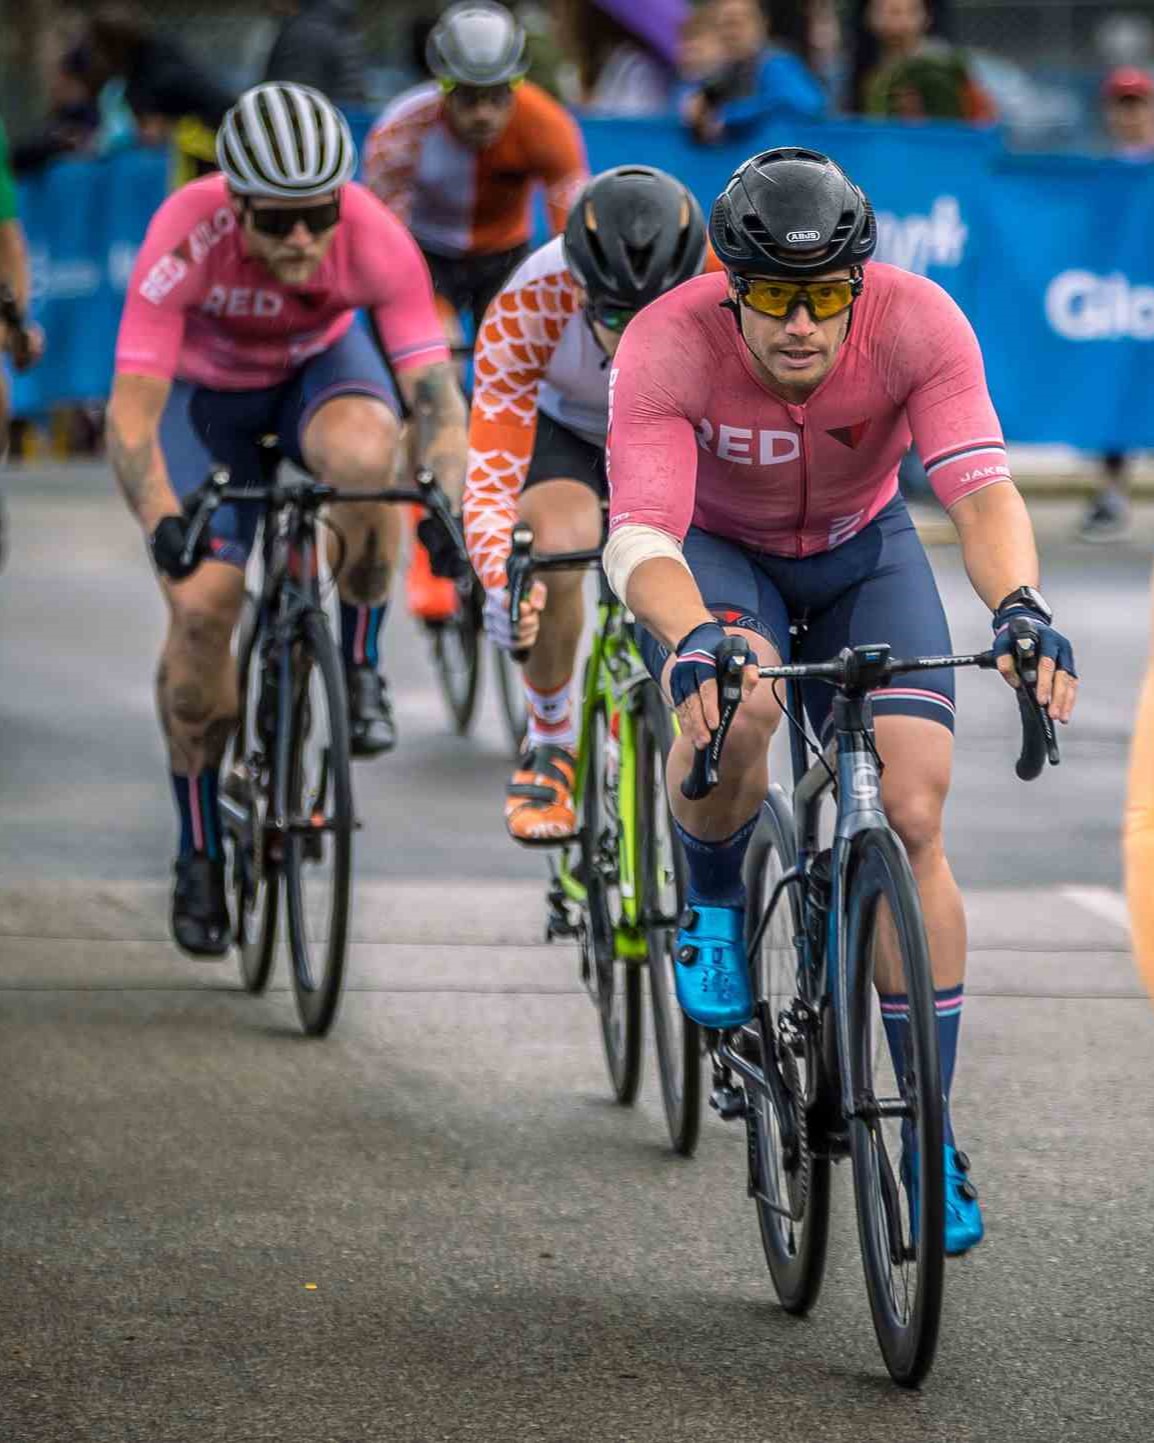 Tour de Concord Cyclists in the Race